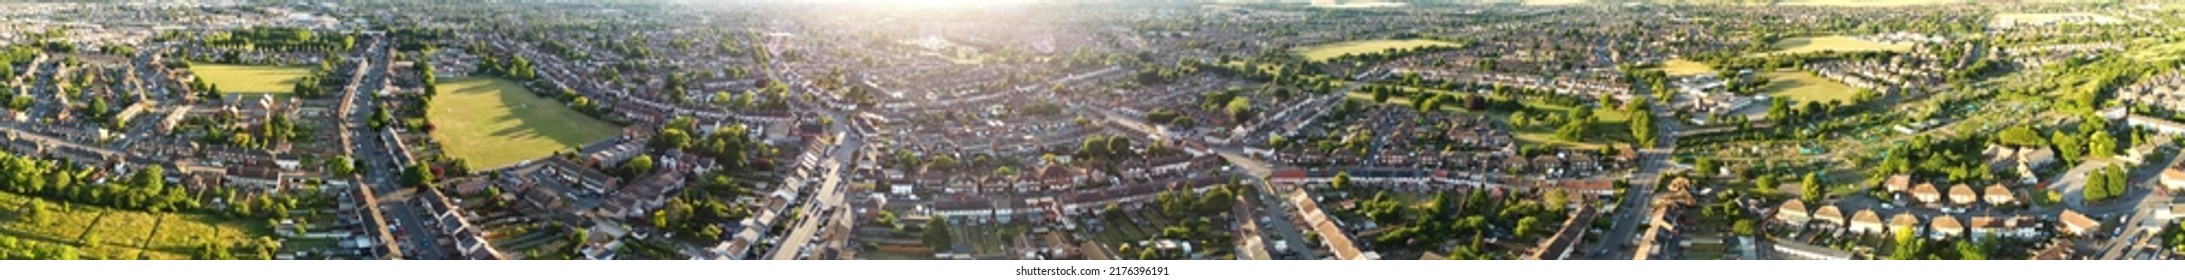 996 Luton town Images, Stock Photos & Vectors | Shutterstock